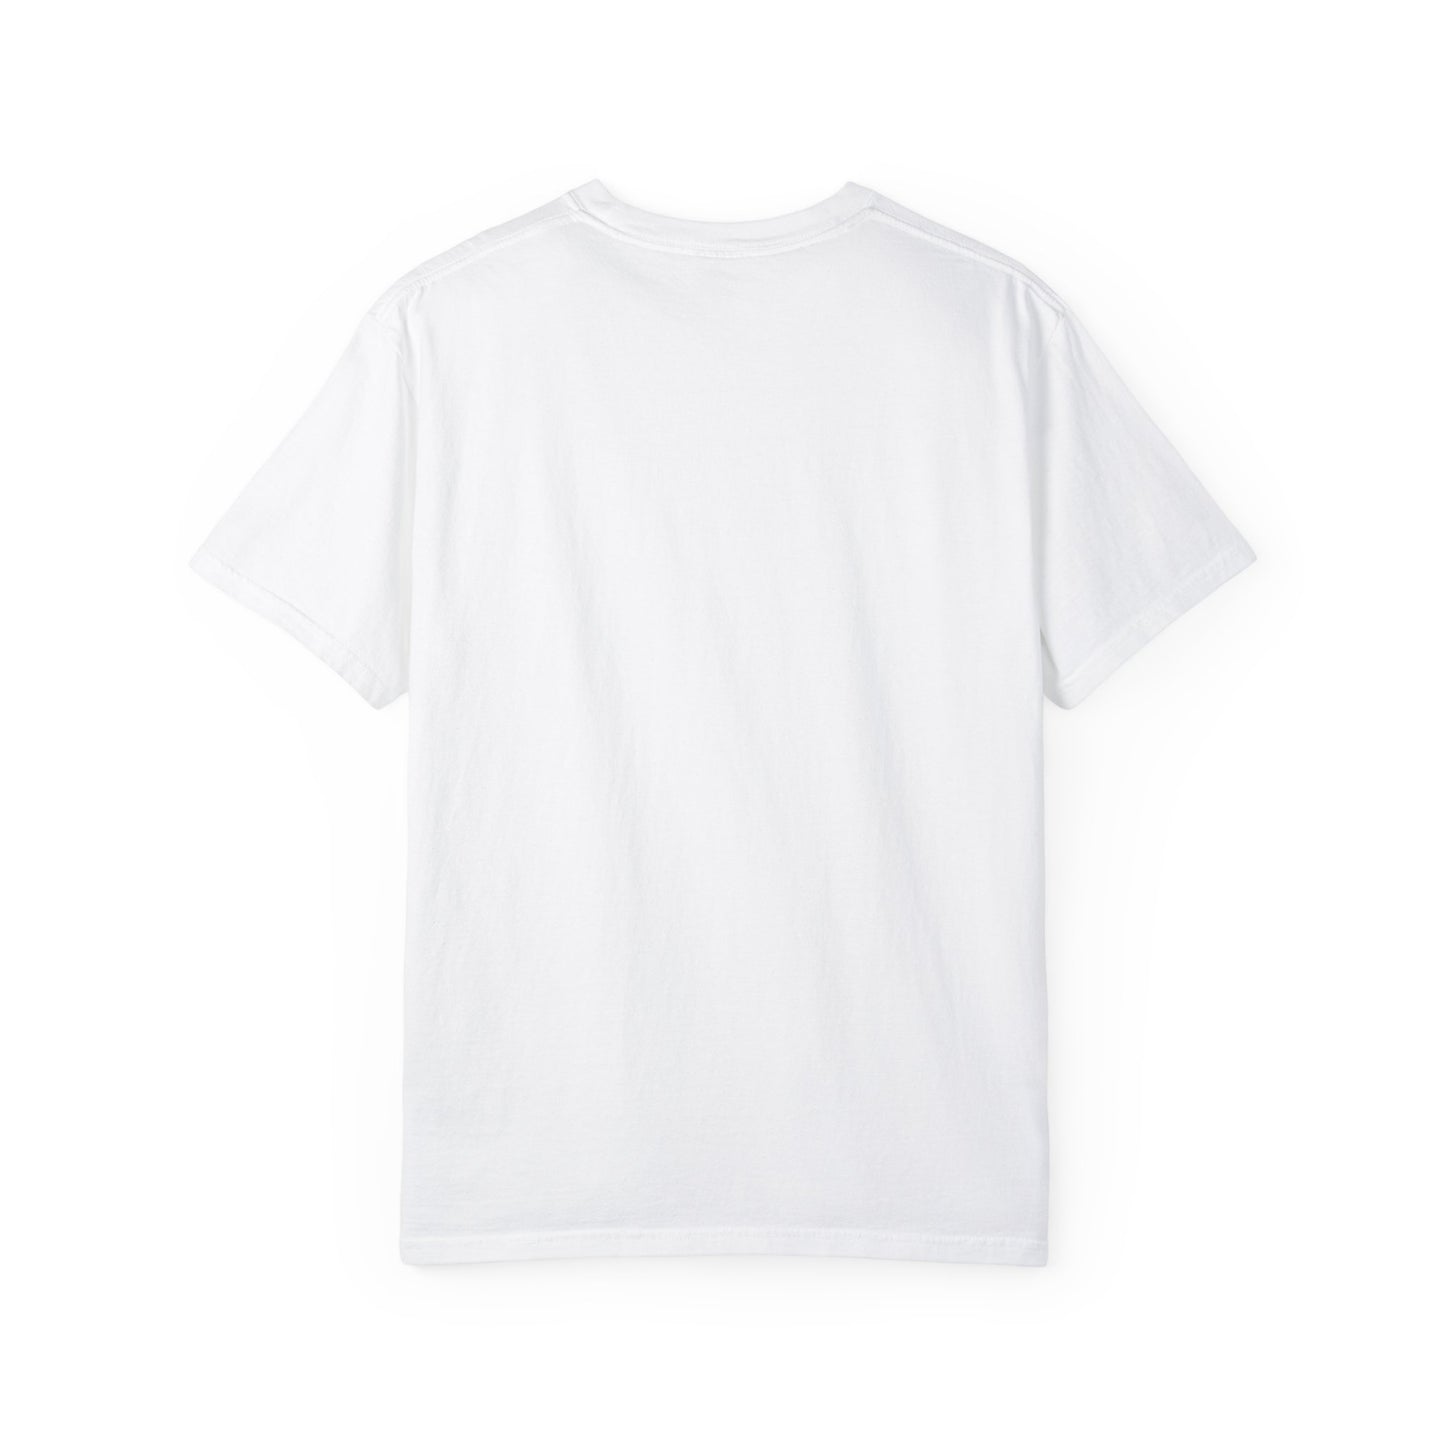 Lion Head Cool Graphic Design Novelty Unisex Garment-dyed T-shirt Cotton Funny Humorous Graphic Soft Premium Unisex Men Women White T-shirt Birthday Gift-22